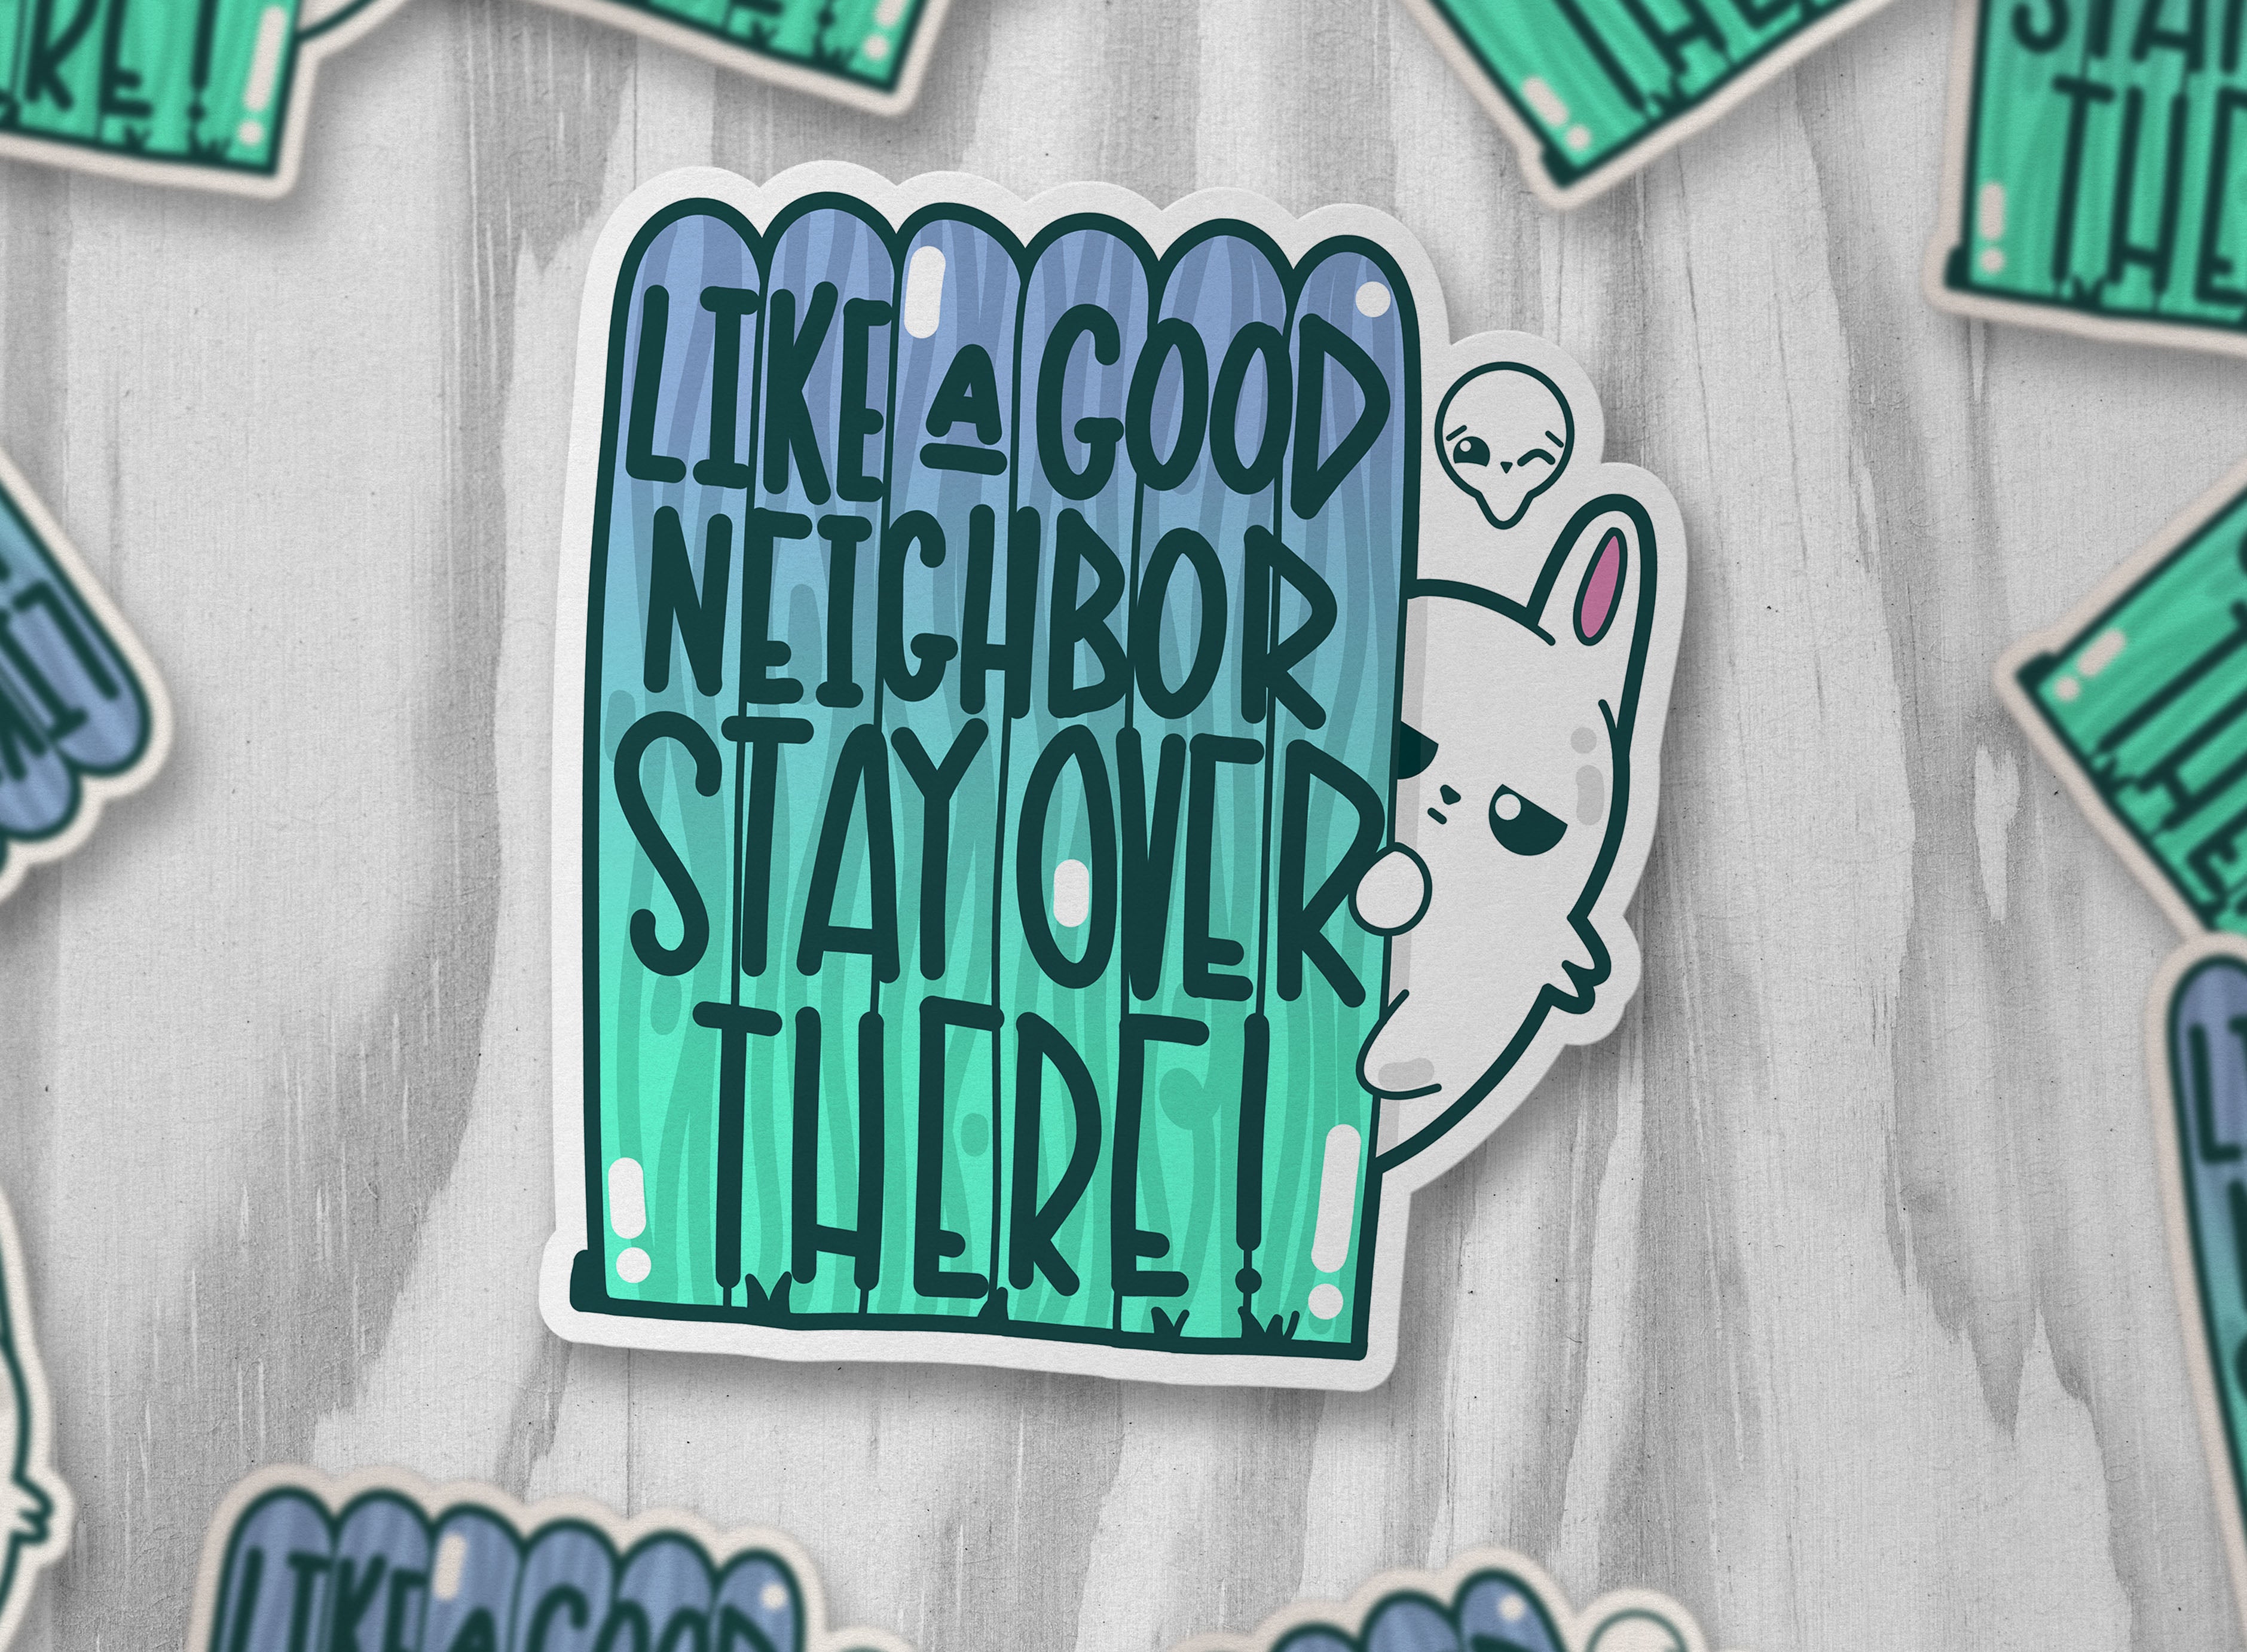 Like A Good Neighbor Stay Over There - ChubbleGumLLC